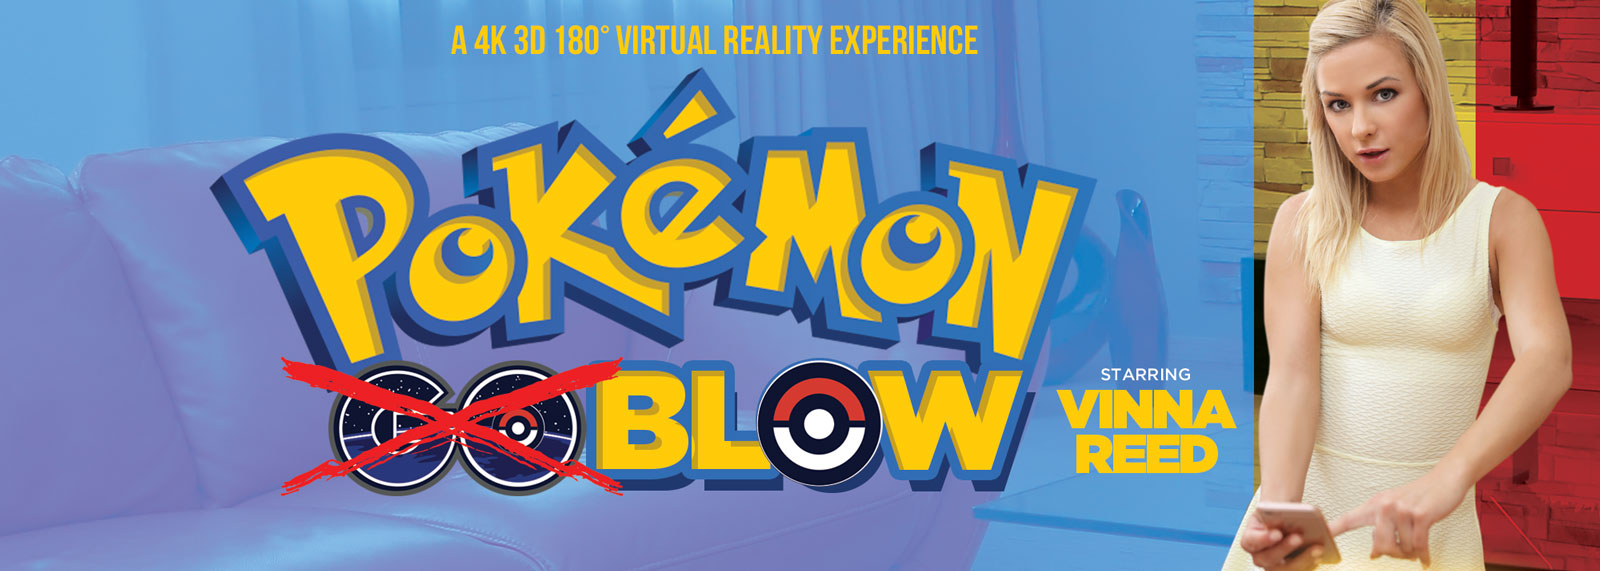 Pokemon Blow with Vinna Reed  Slideshow